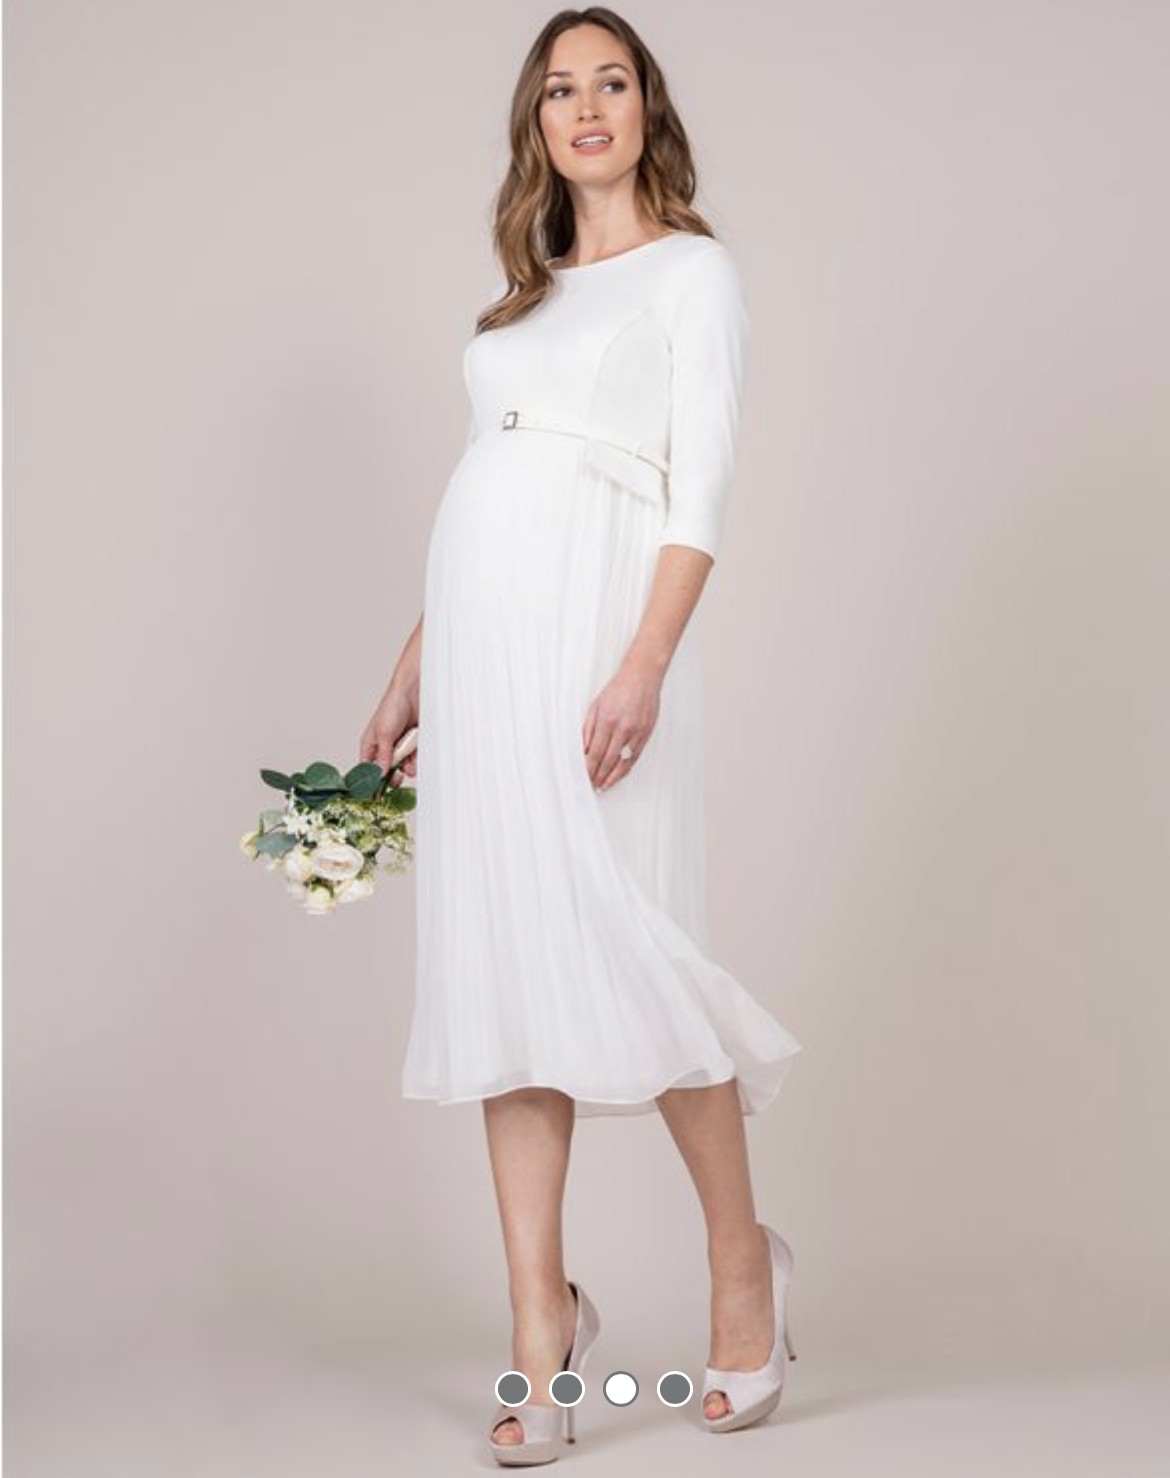 Seraphine Maternity Ivory Pleated Maternity Midi Dress New Wedding Dress  Save 61% - Stillwhite